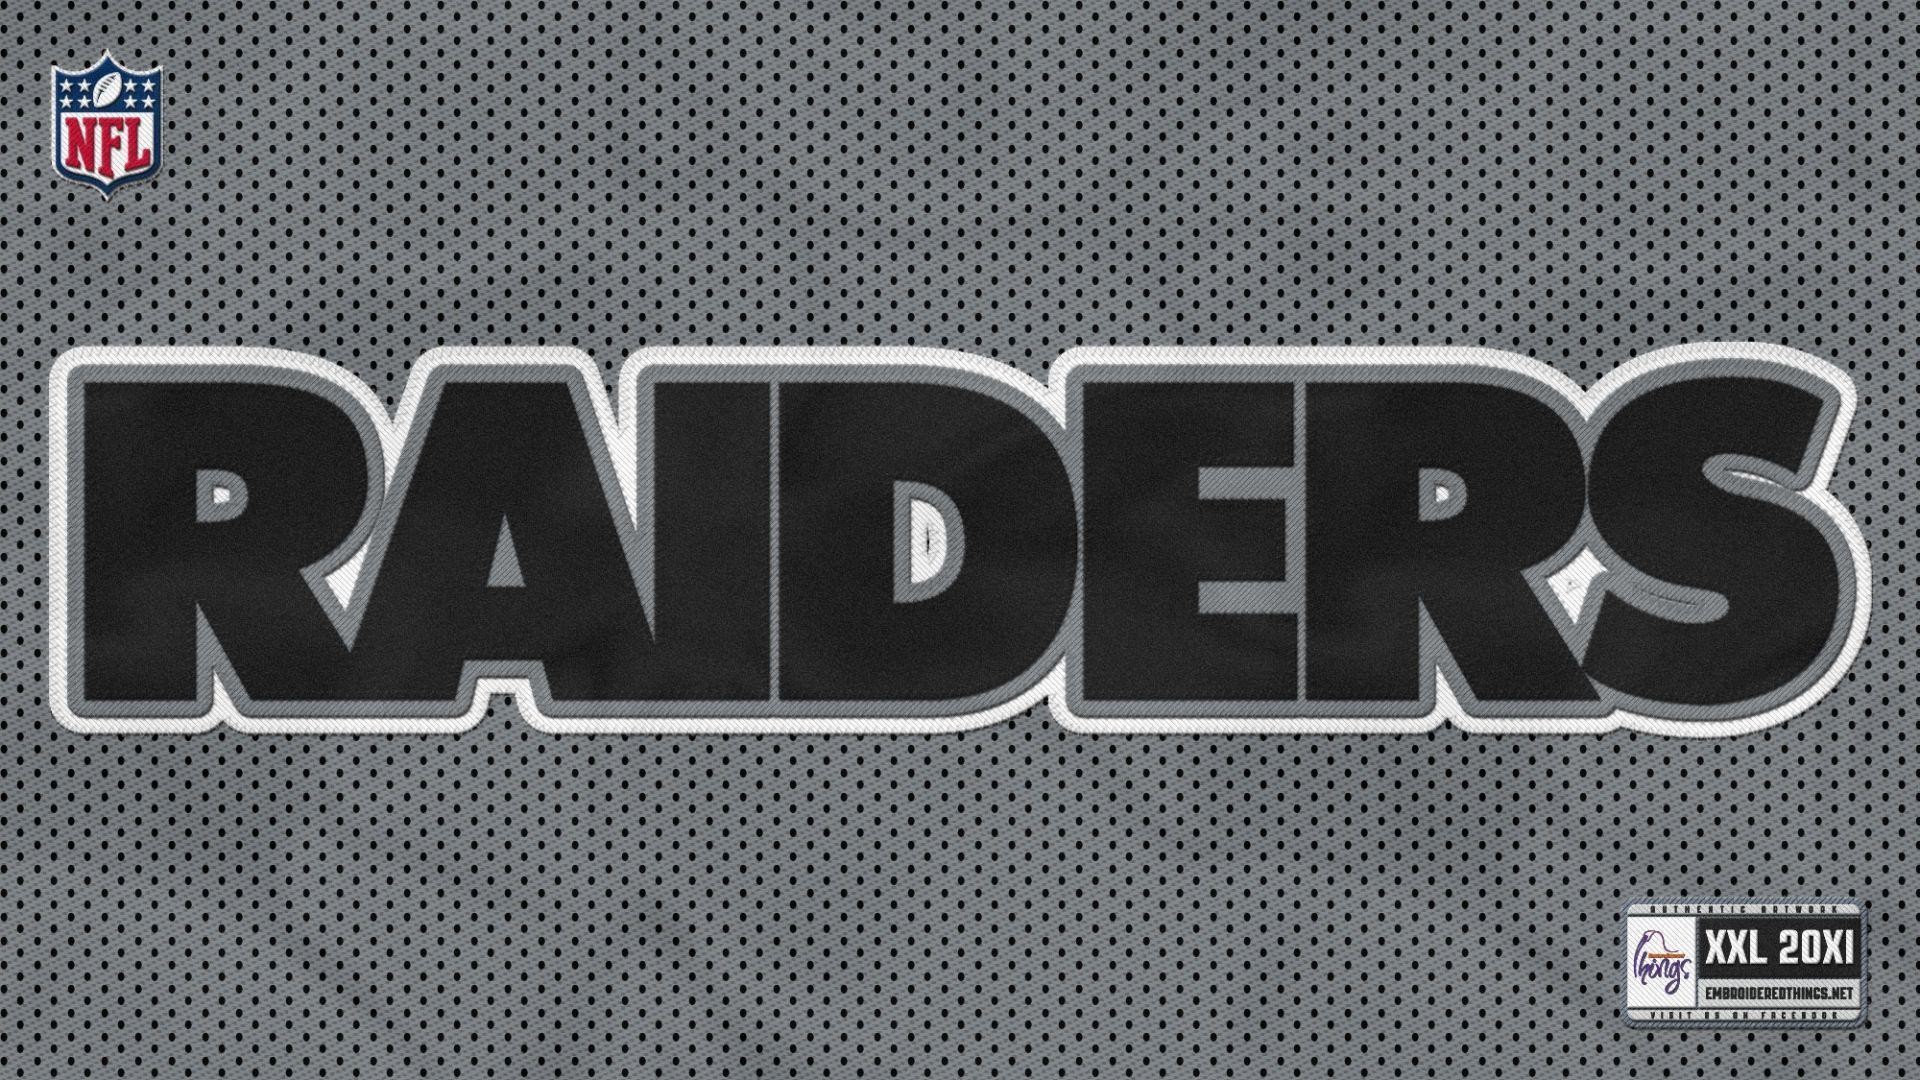 1920x1080 Full HD 1080p Oakland raiders Wallpapers HD, Desktop Backgrounds .